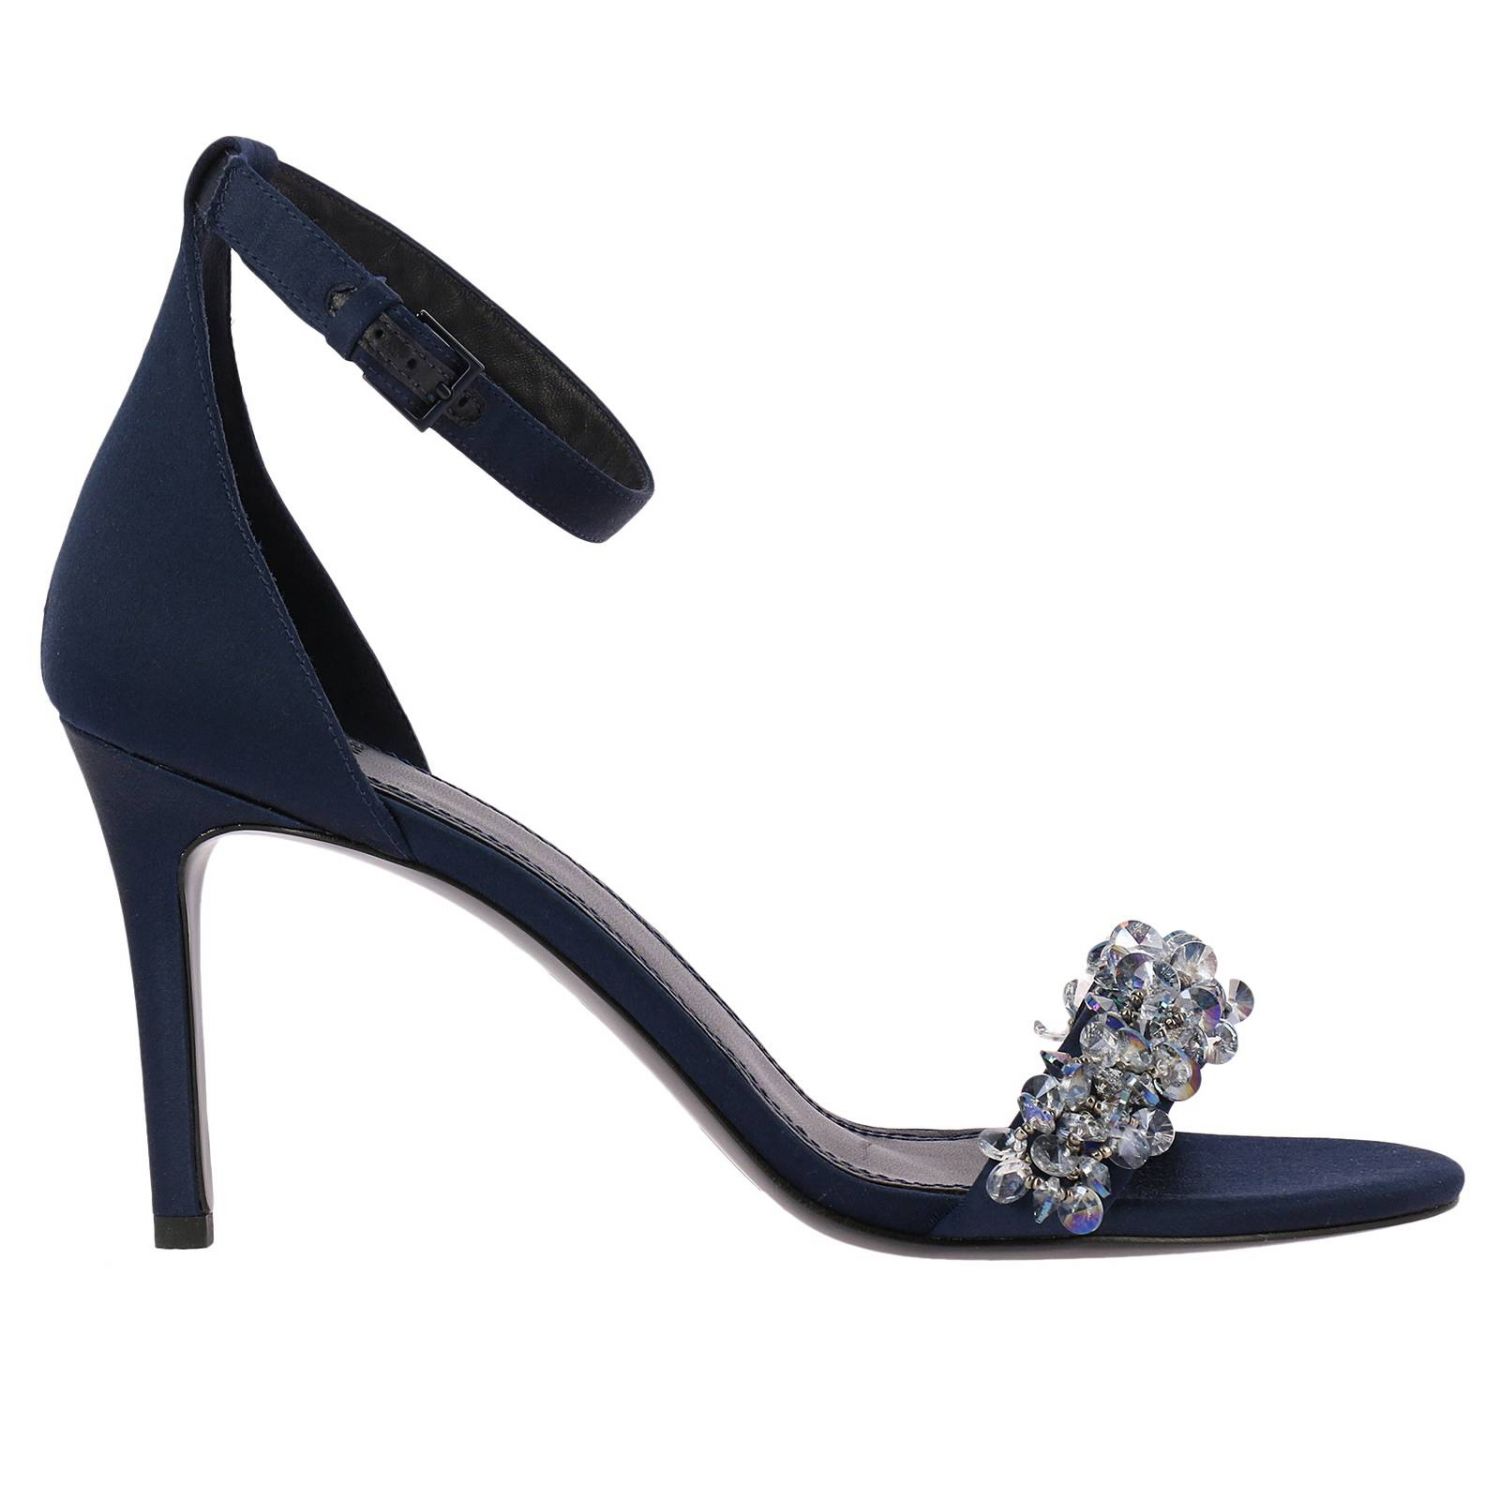 Tory Burch Outlet: Shoes women | Heeled Sandals Tory Burch Women Blue ...